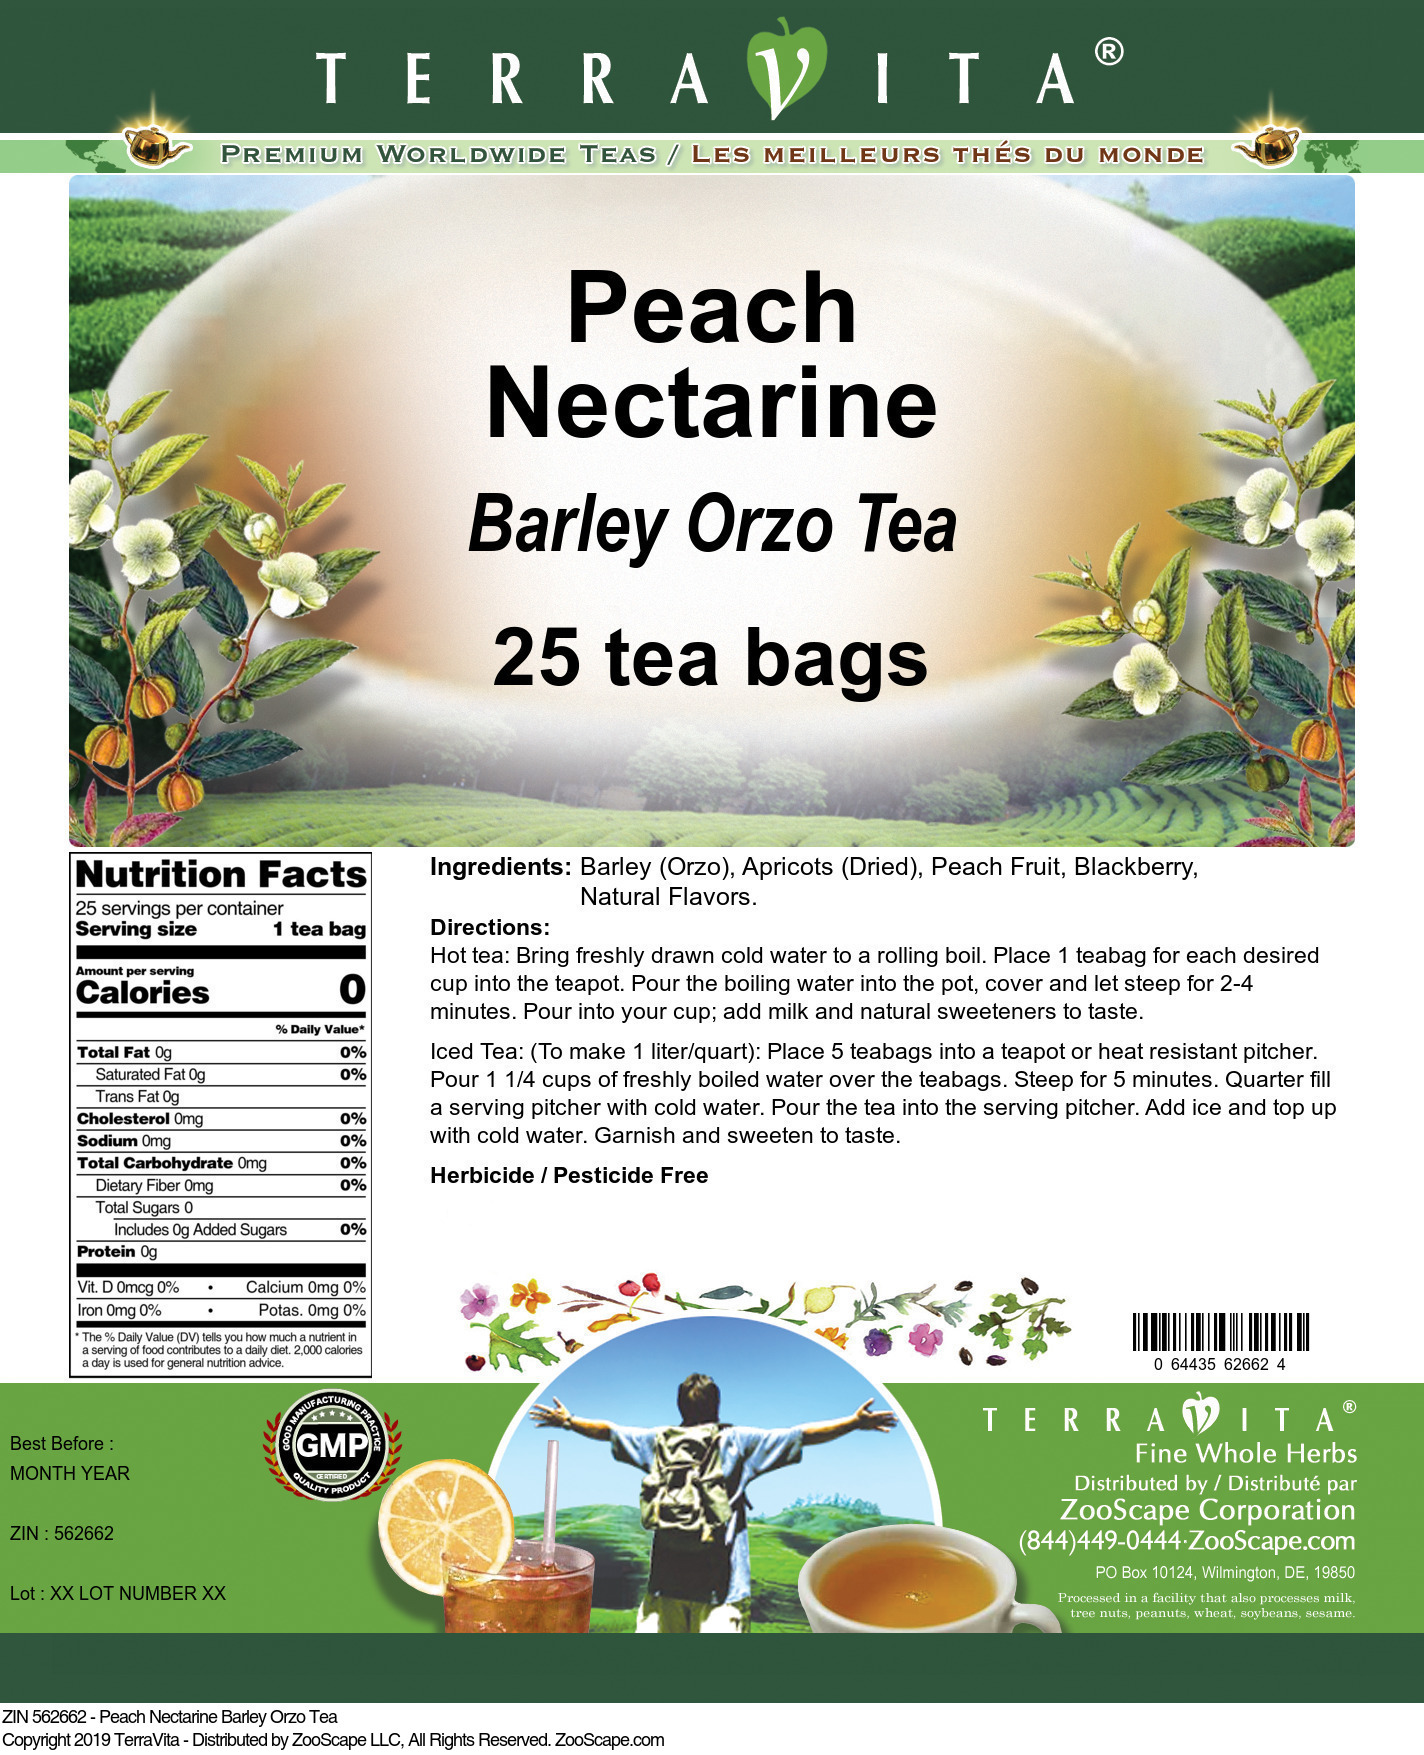 Peach Nectarine Barley Orzo Tea - Label